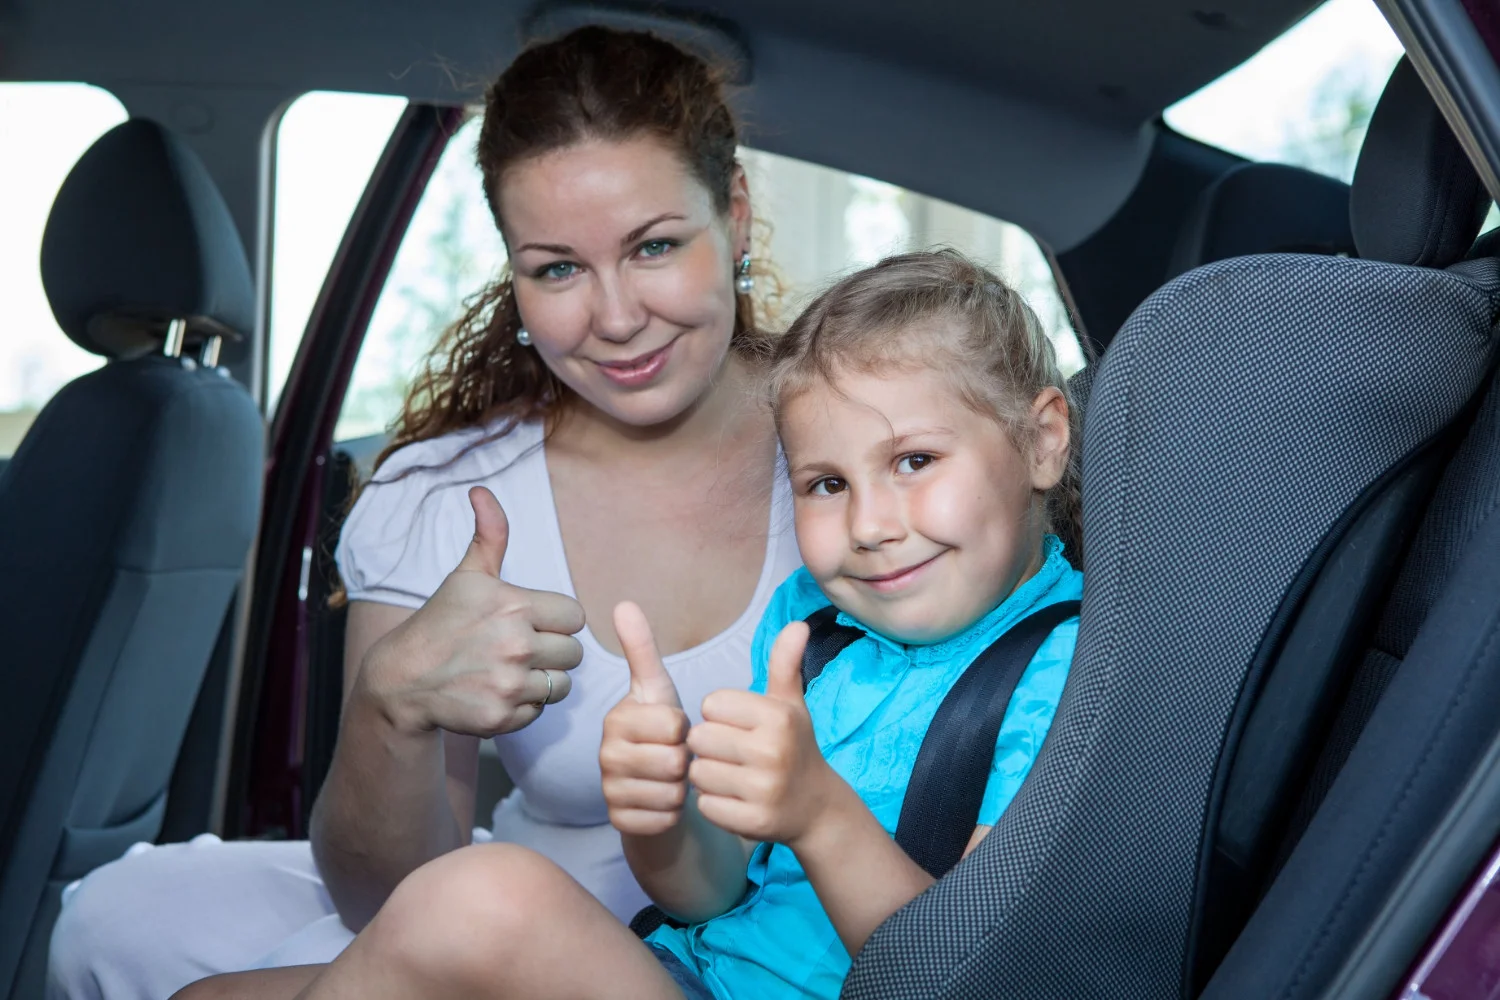 Seatbelts and child-restraint seats are mandatory in Croatia